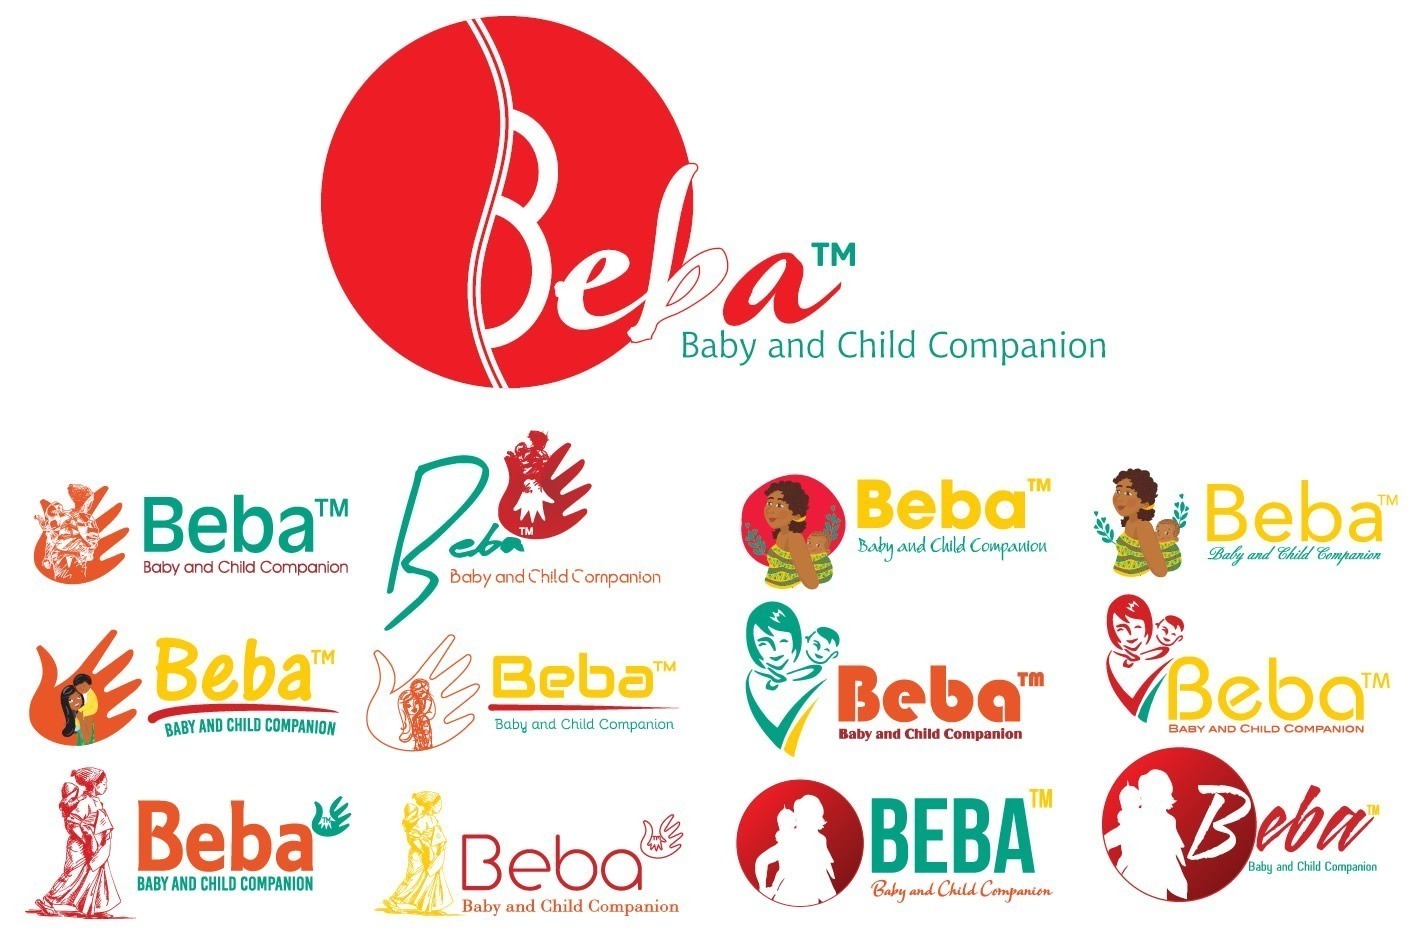 Beba Baby and Child Companion, Baby Companion, Child Companion, Logo Design, Logo Designers